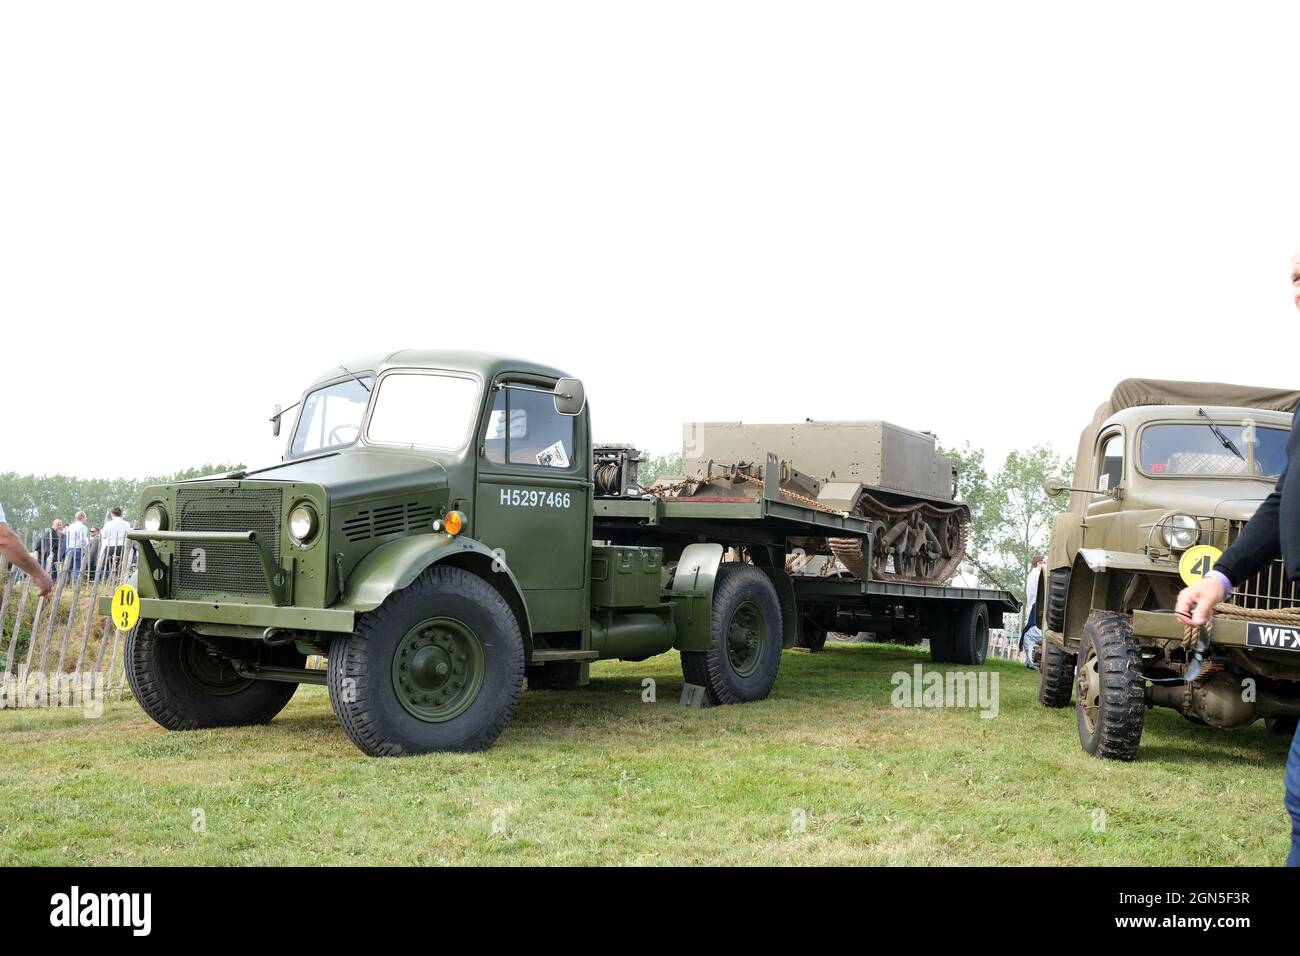 Settembre 2021 - Bedford OX Military Truck in mostra al Goodwood Revival Race meeting per auto d'epoca e moto. Foto Stock